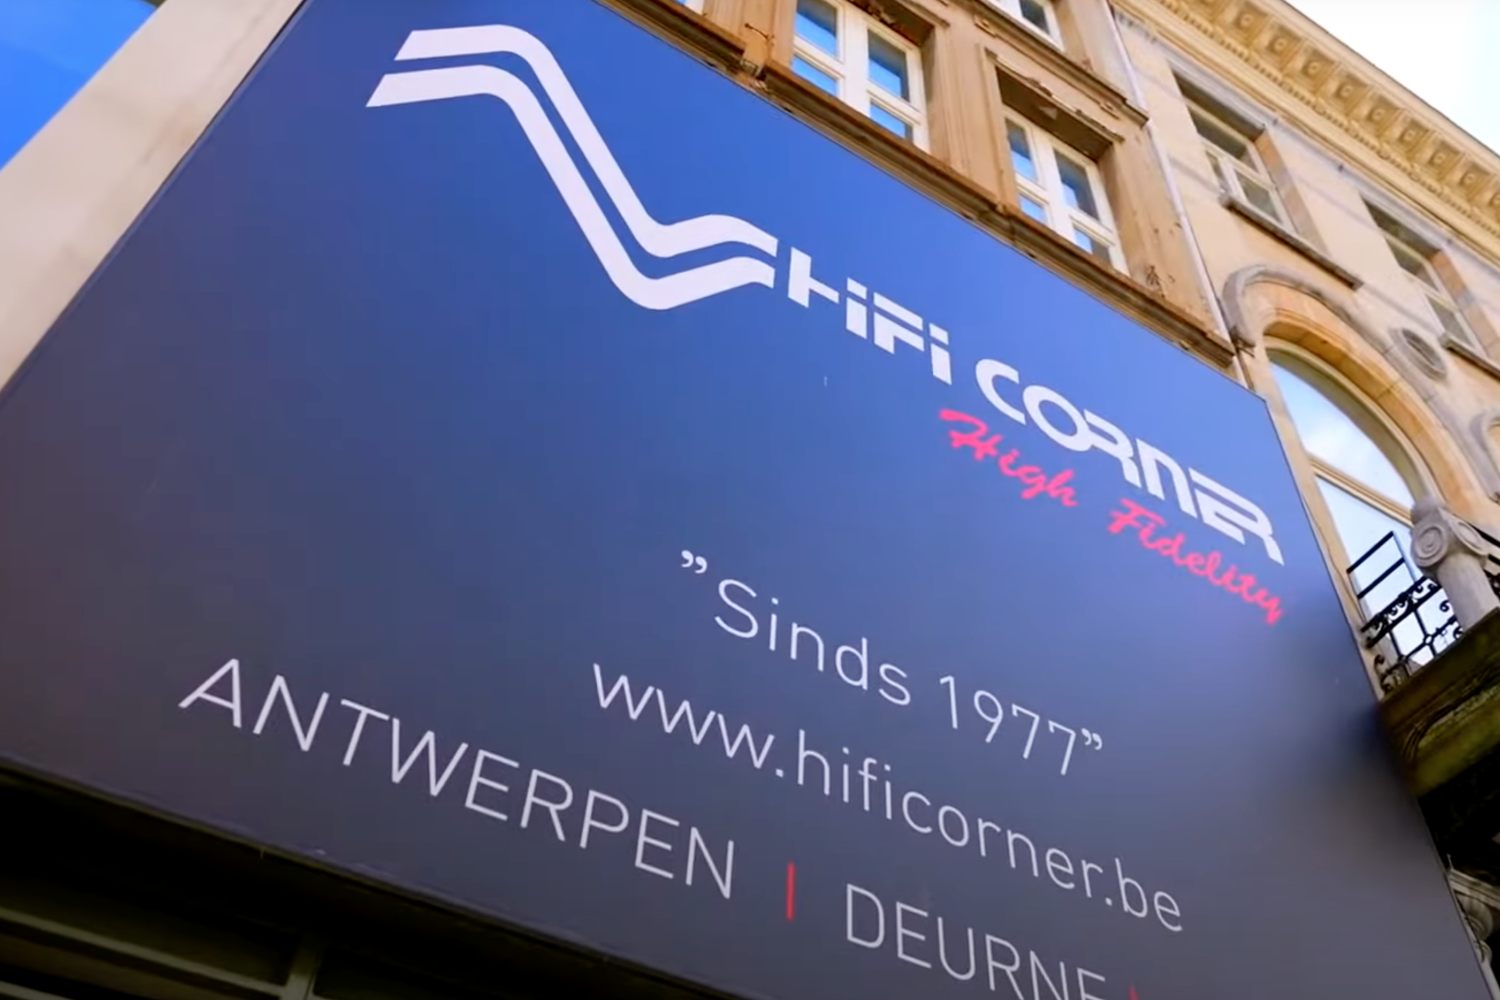 Hifi Corner website